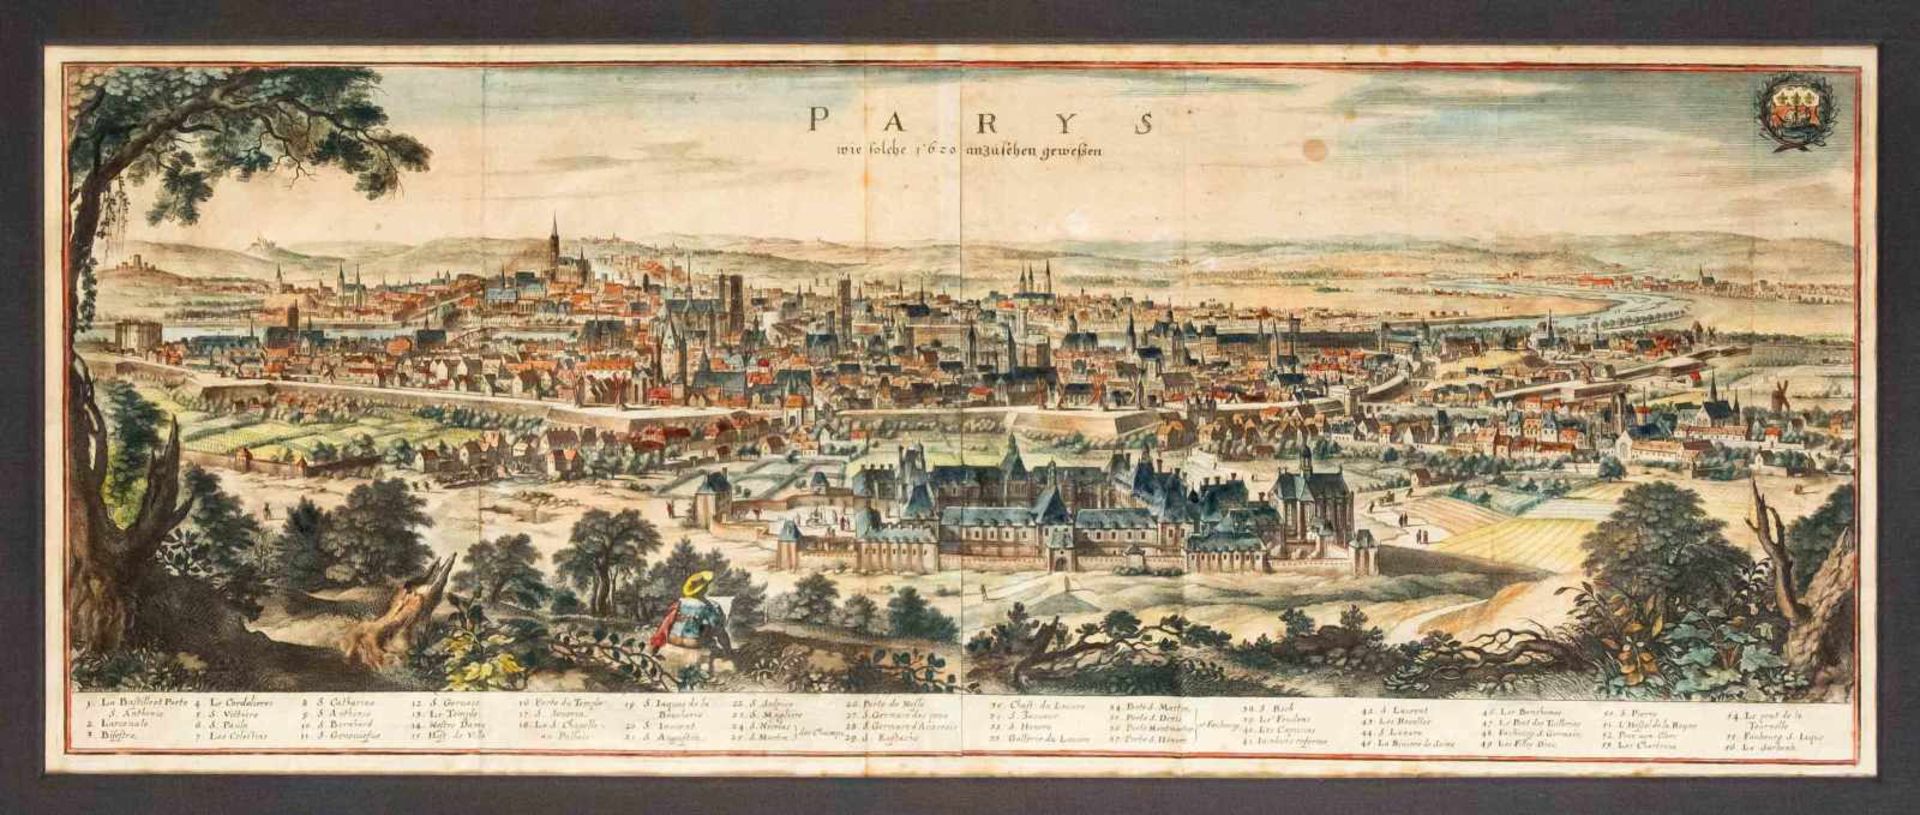 Paris - large panorama ''Parys wie solche 1620 anzusehen geweßen'', col. Etching from Merian<